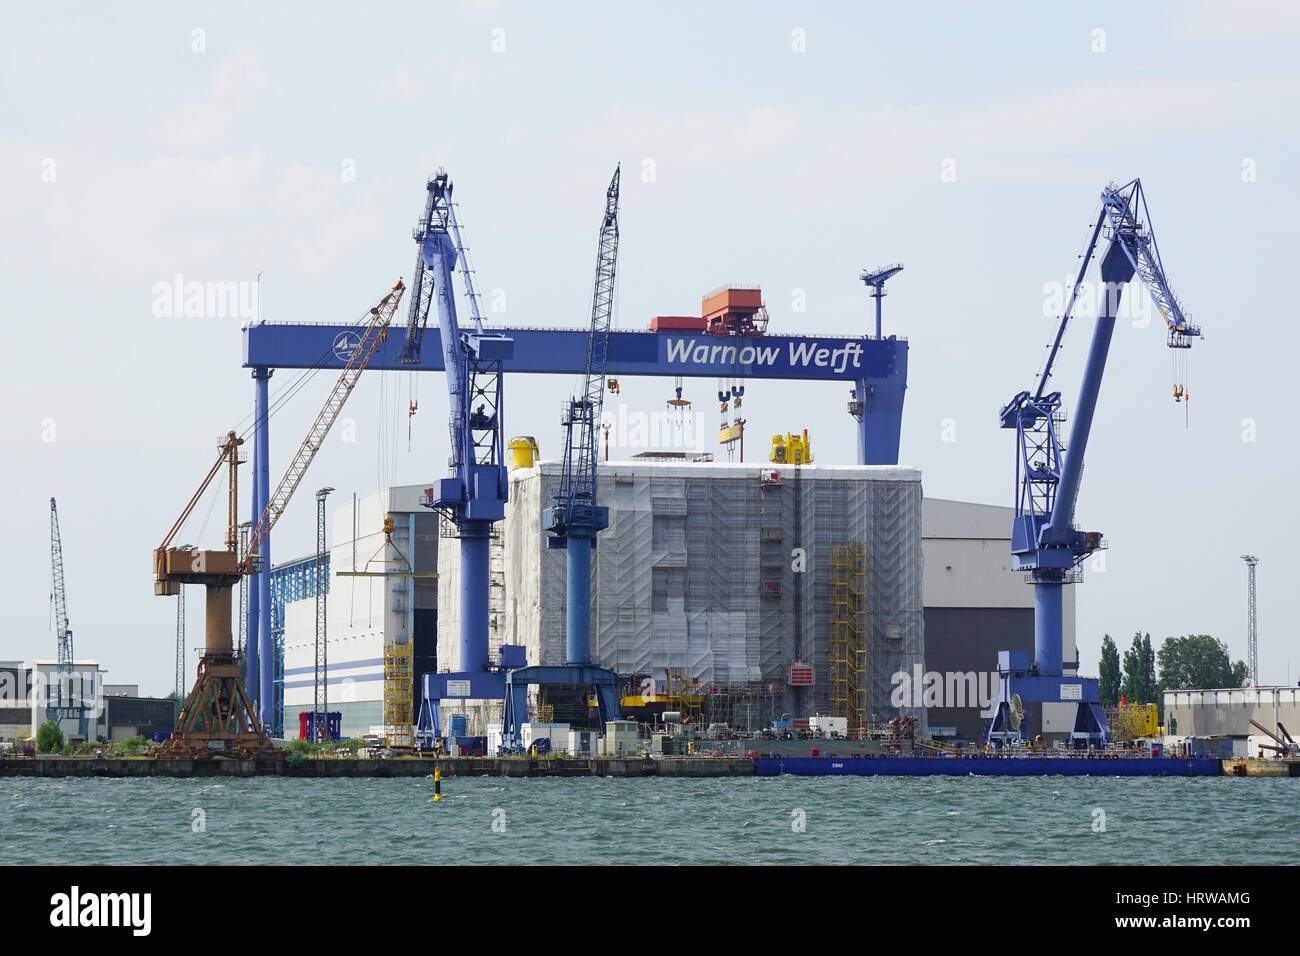 Rostock, Germany - May 30th, 2016: Warnow Werft shipbuilding wharf on river Warnow in Rostock Warnemunde. Stock Photo